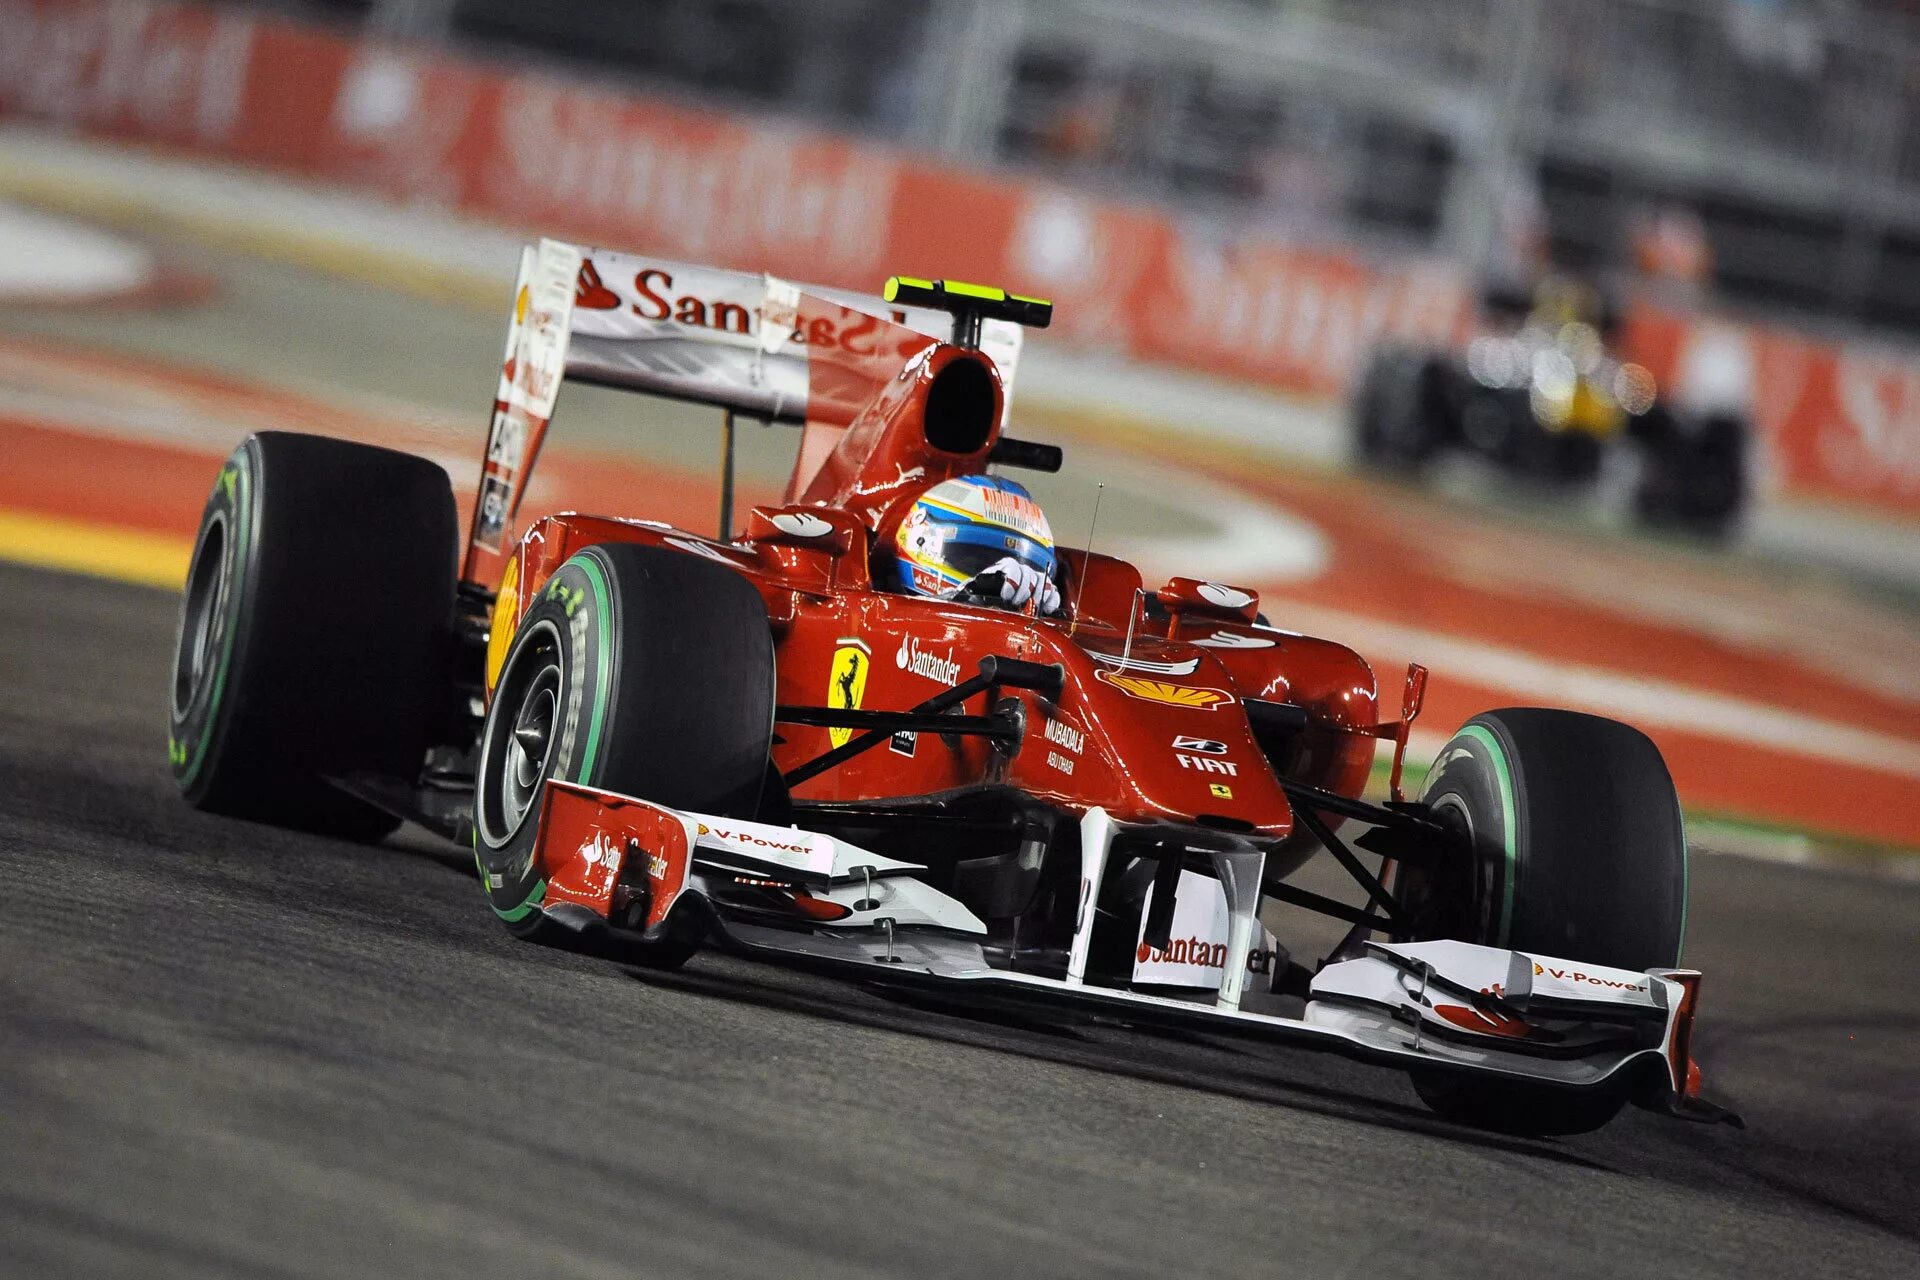 Феррари f1 2010. Ferrari f10 f1. Гоночный Болид Феррари формула 1. Grand prix f1.